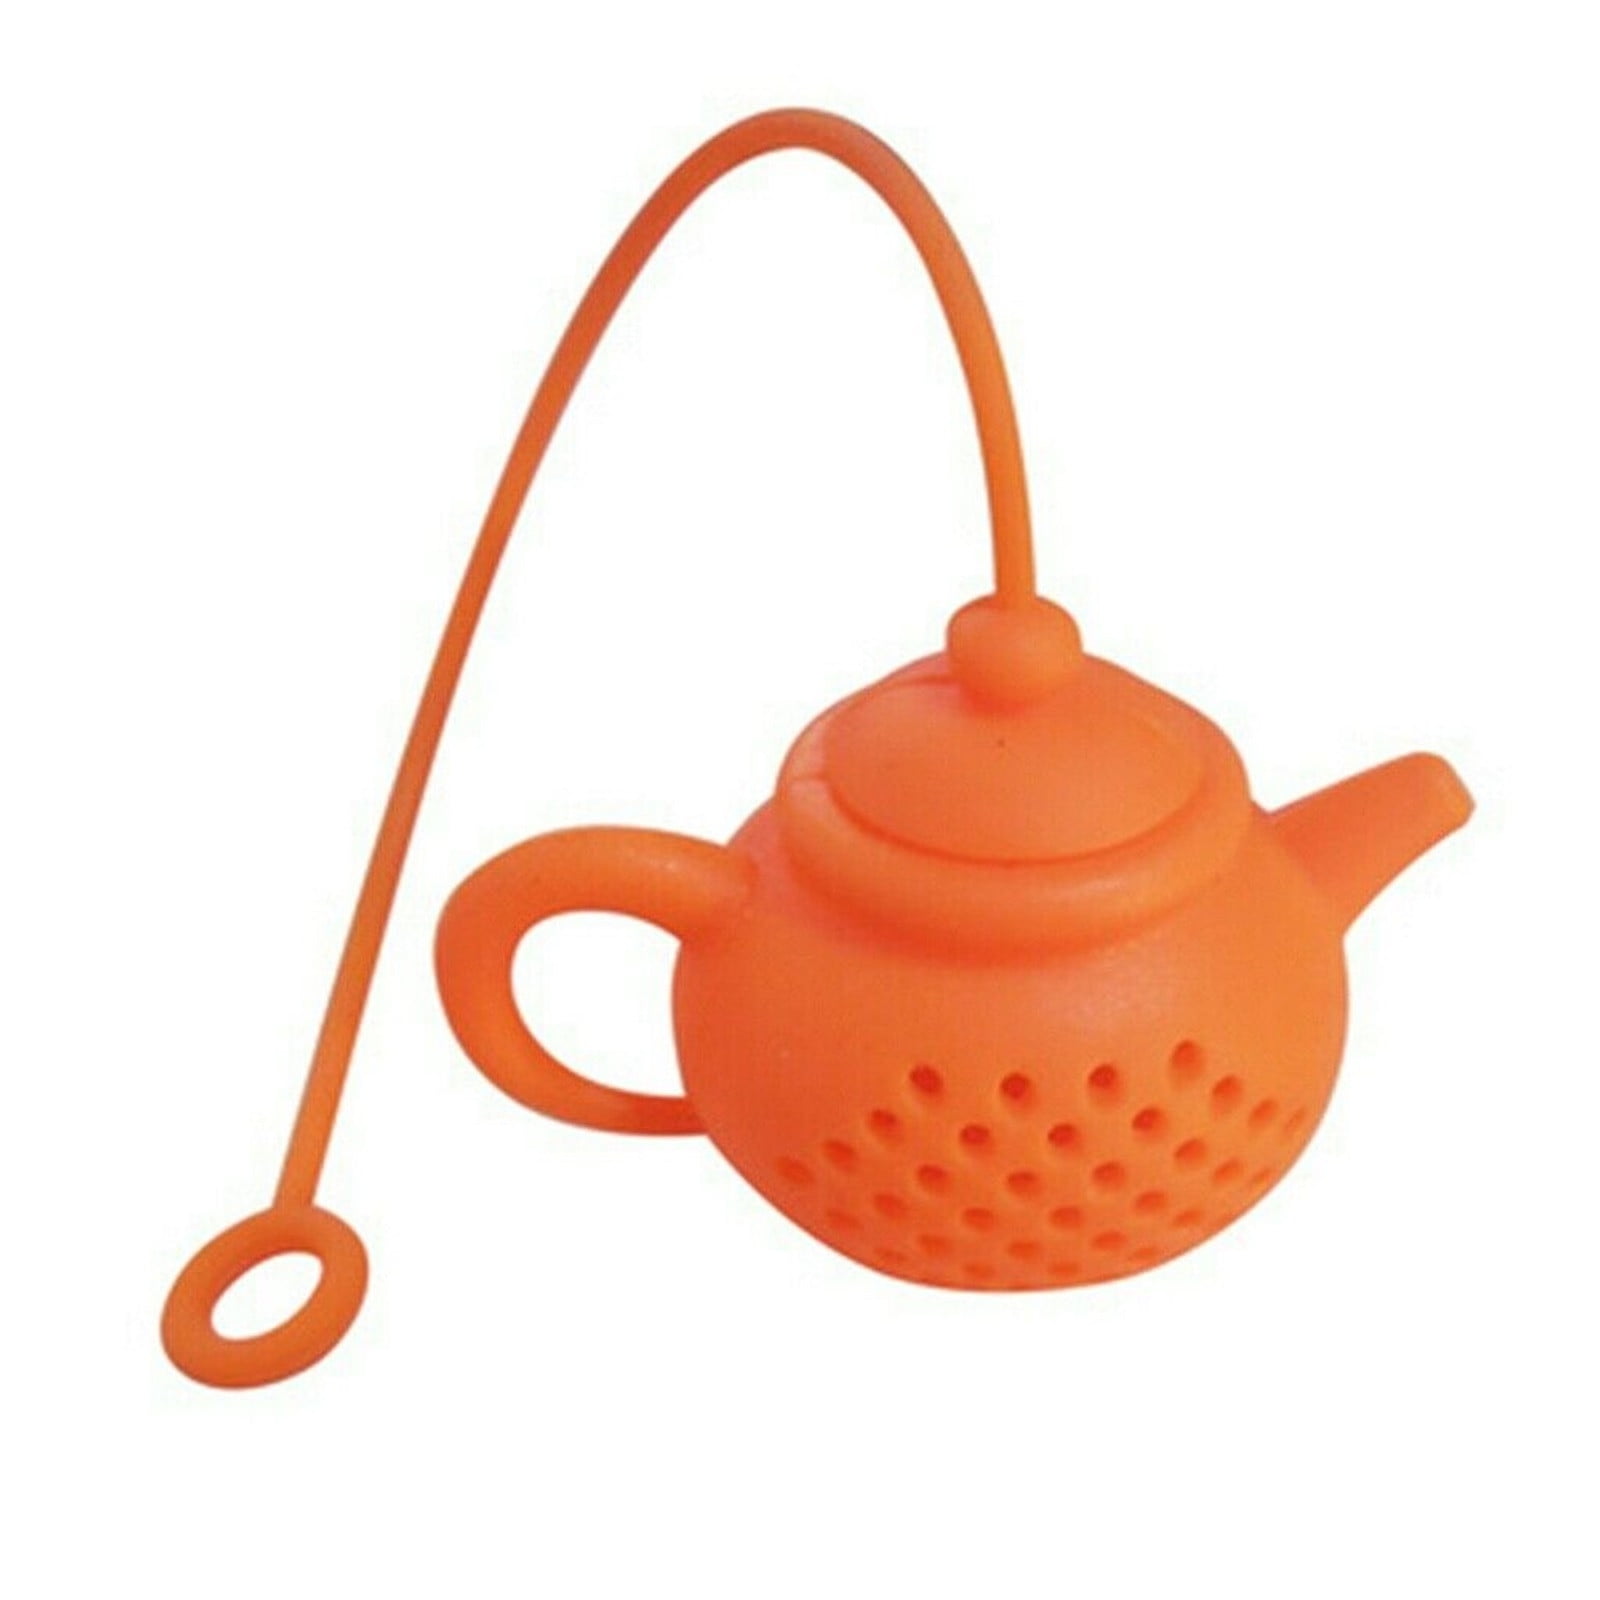 Durable Silicone Teapot Shape Tea Infuser Strainer Tea Bag Leaf Filter Diffuser